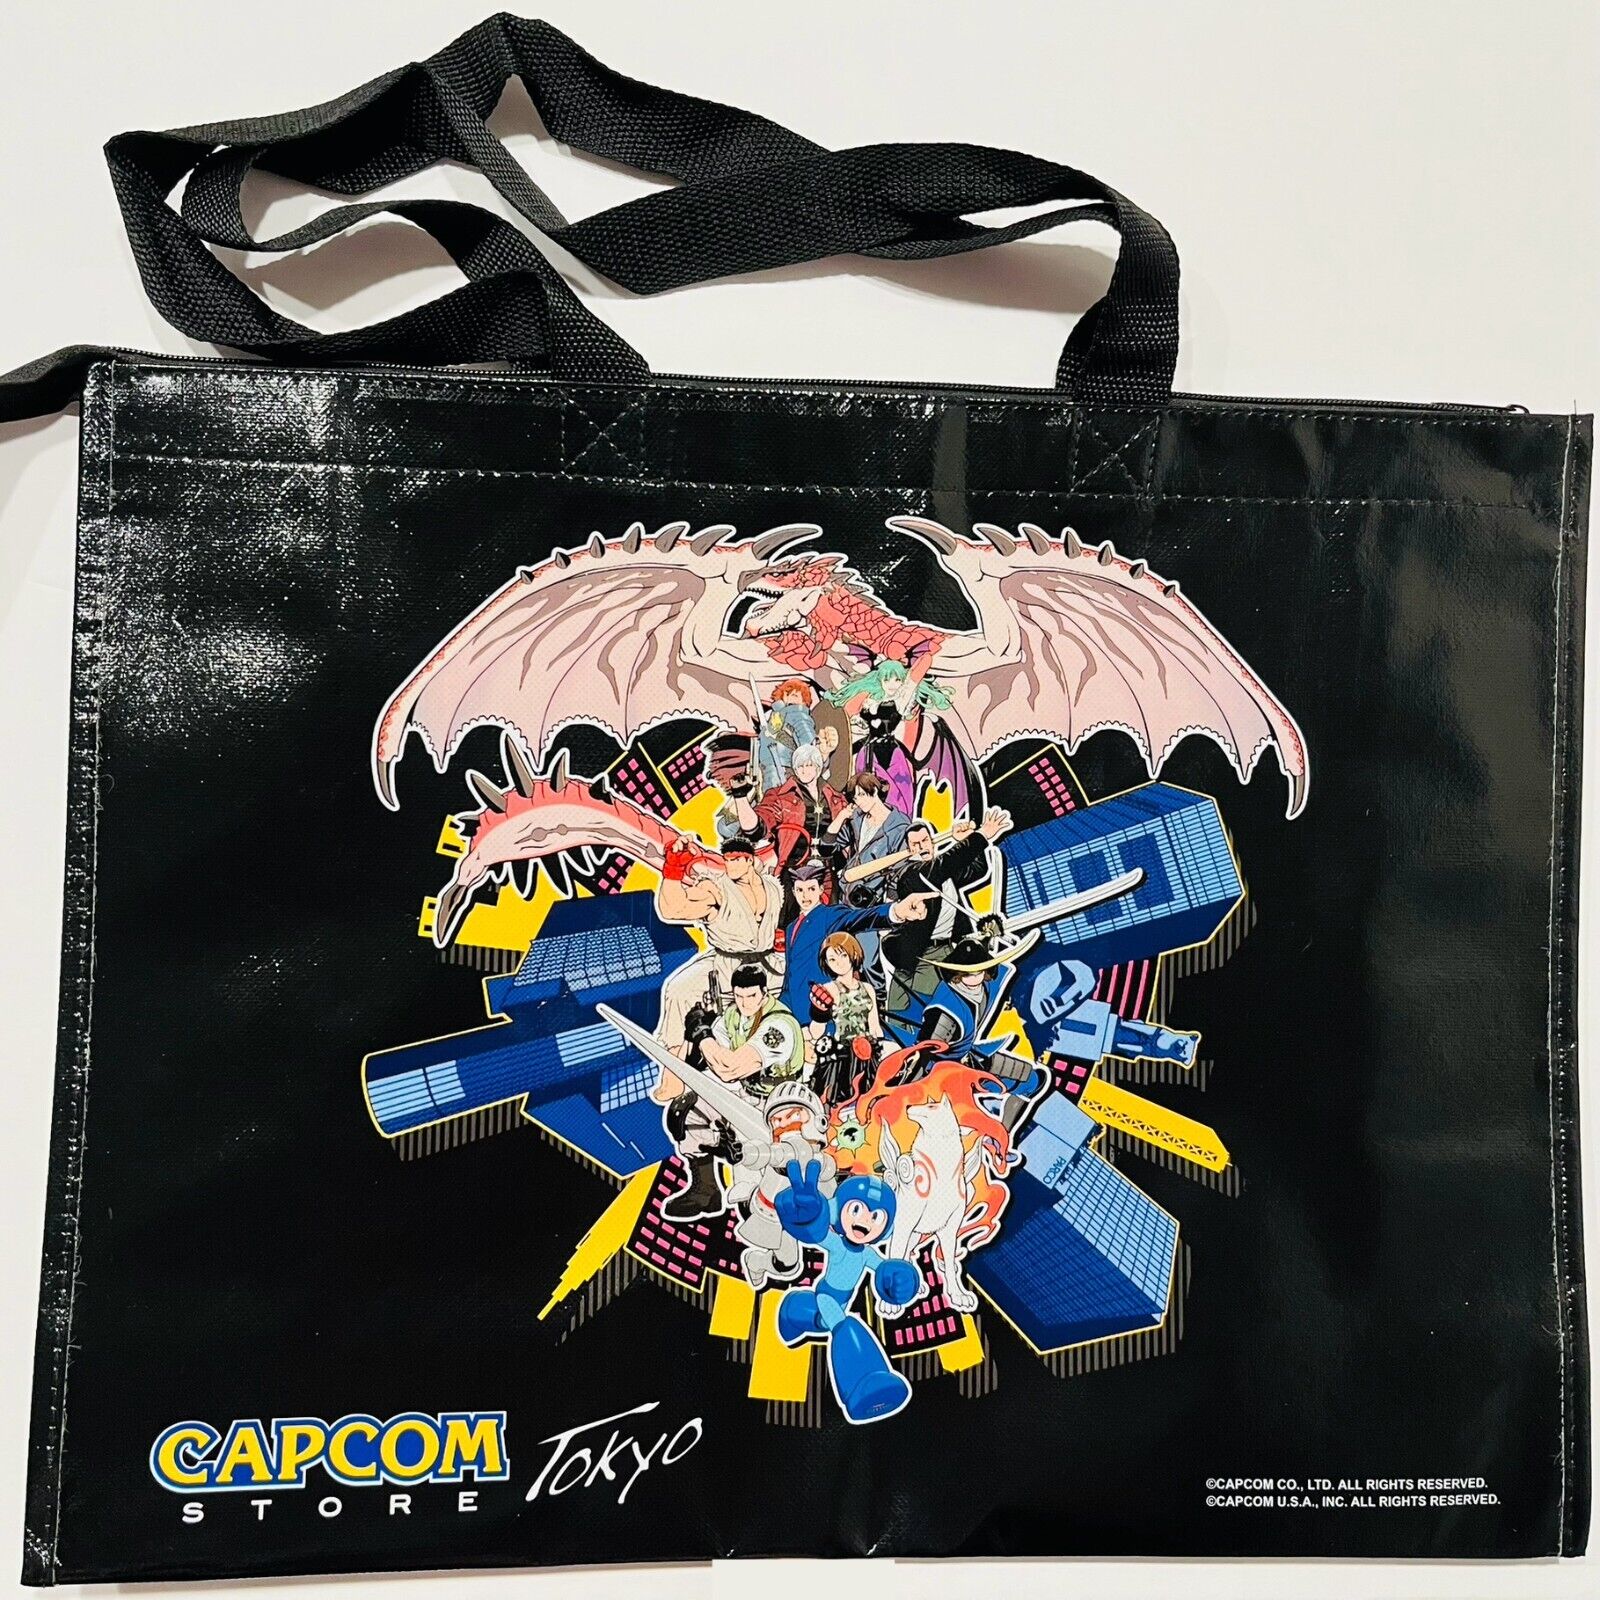 Capcom Store Tokyo tote bag - Official large vinyl black bag